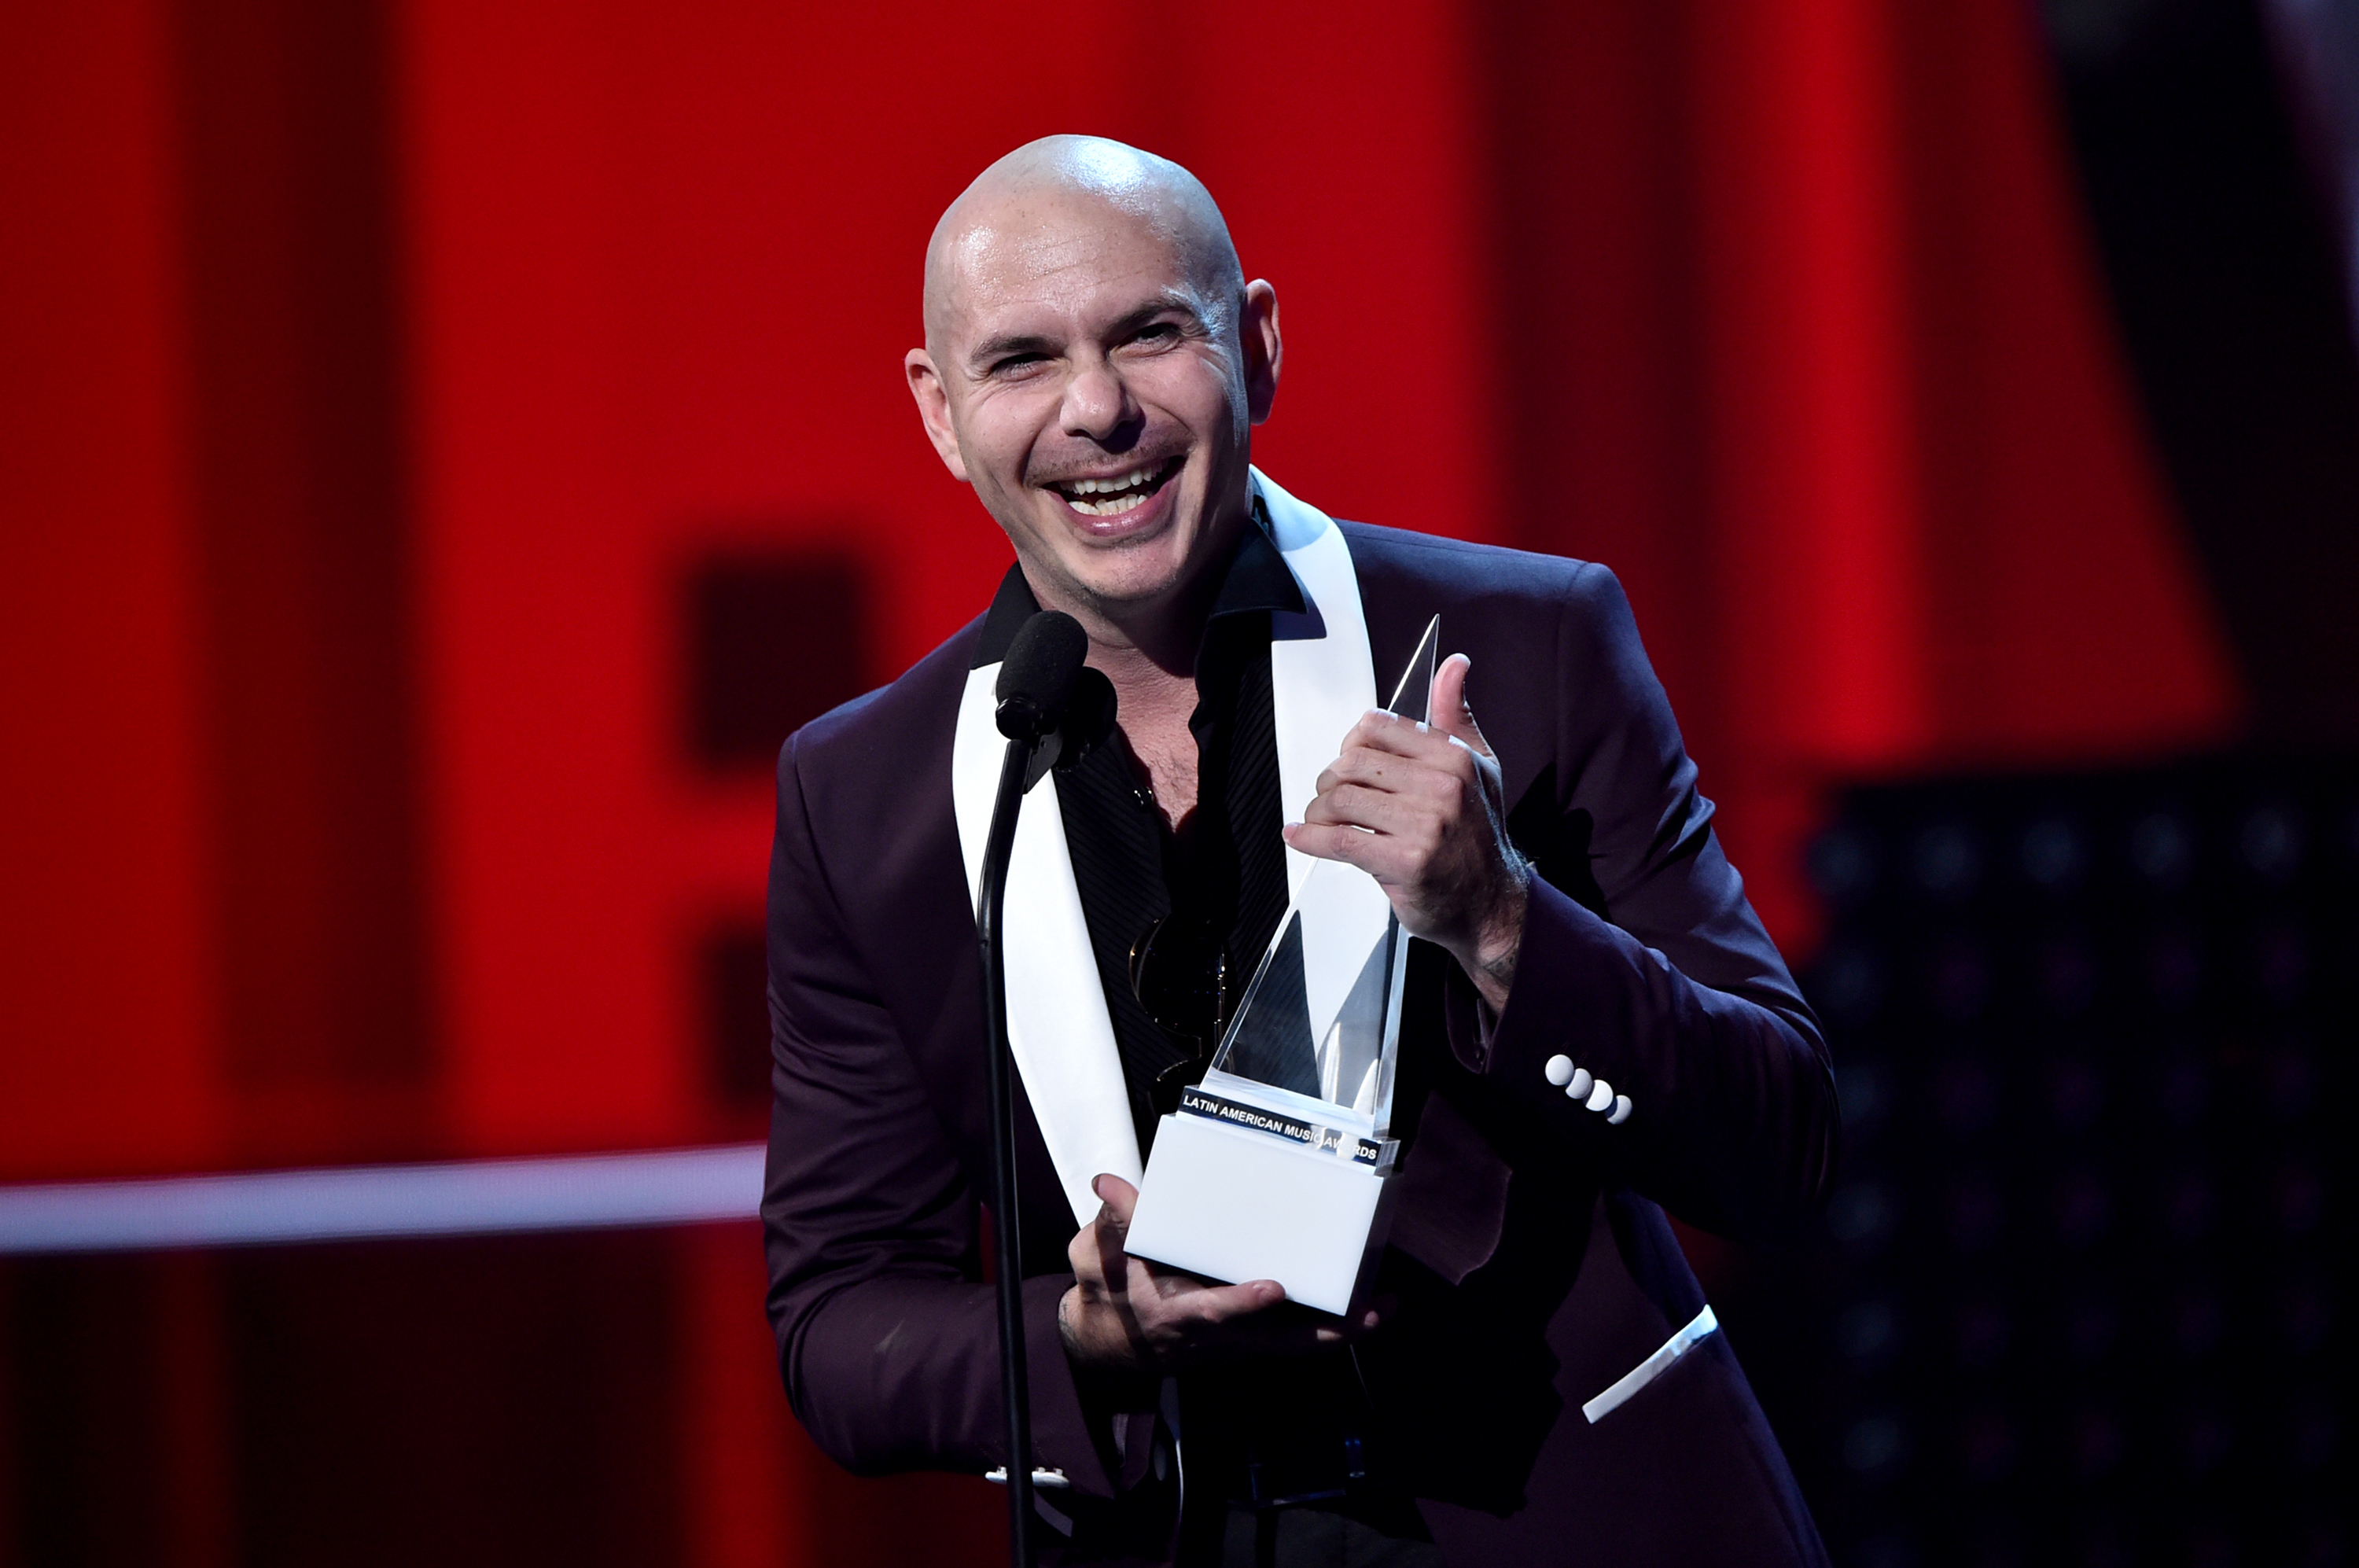 Pitbull smiling and holding an award